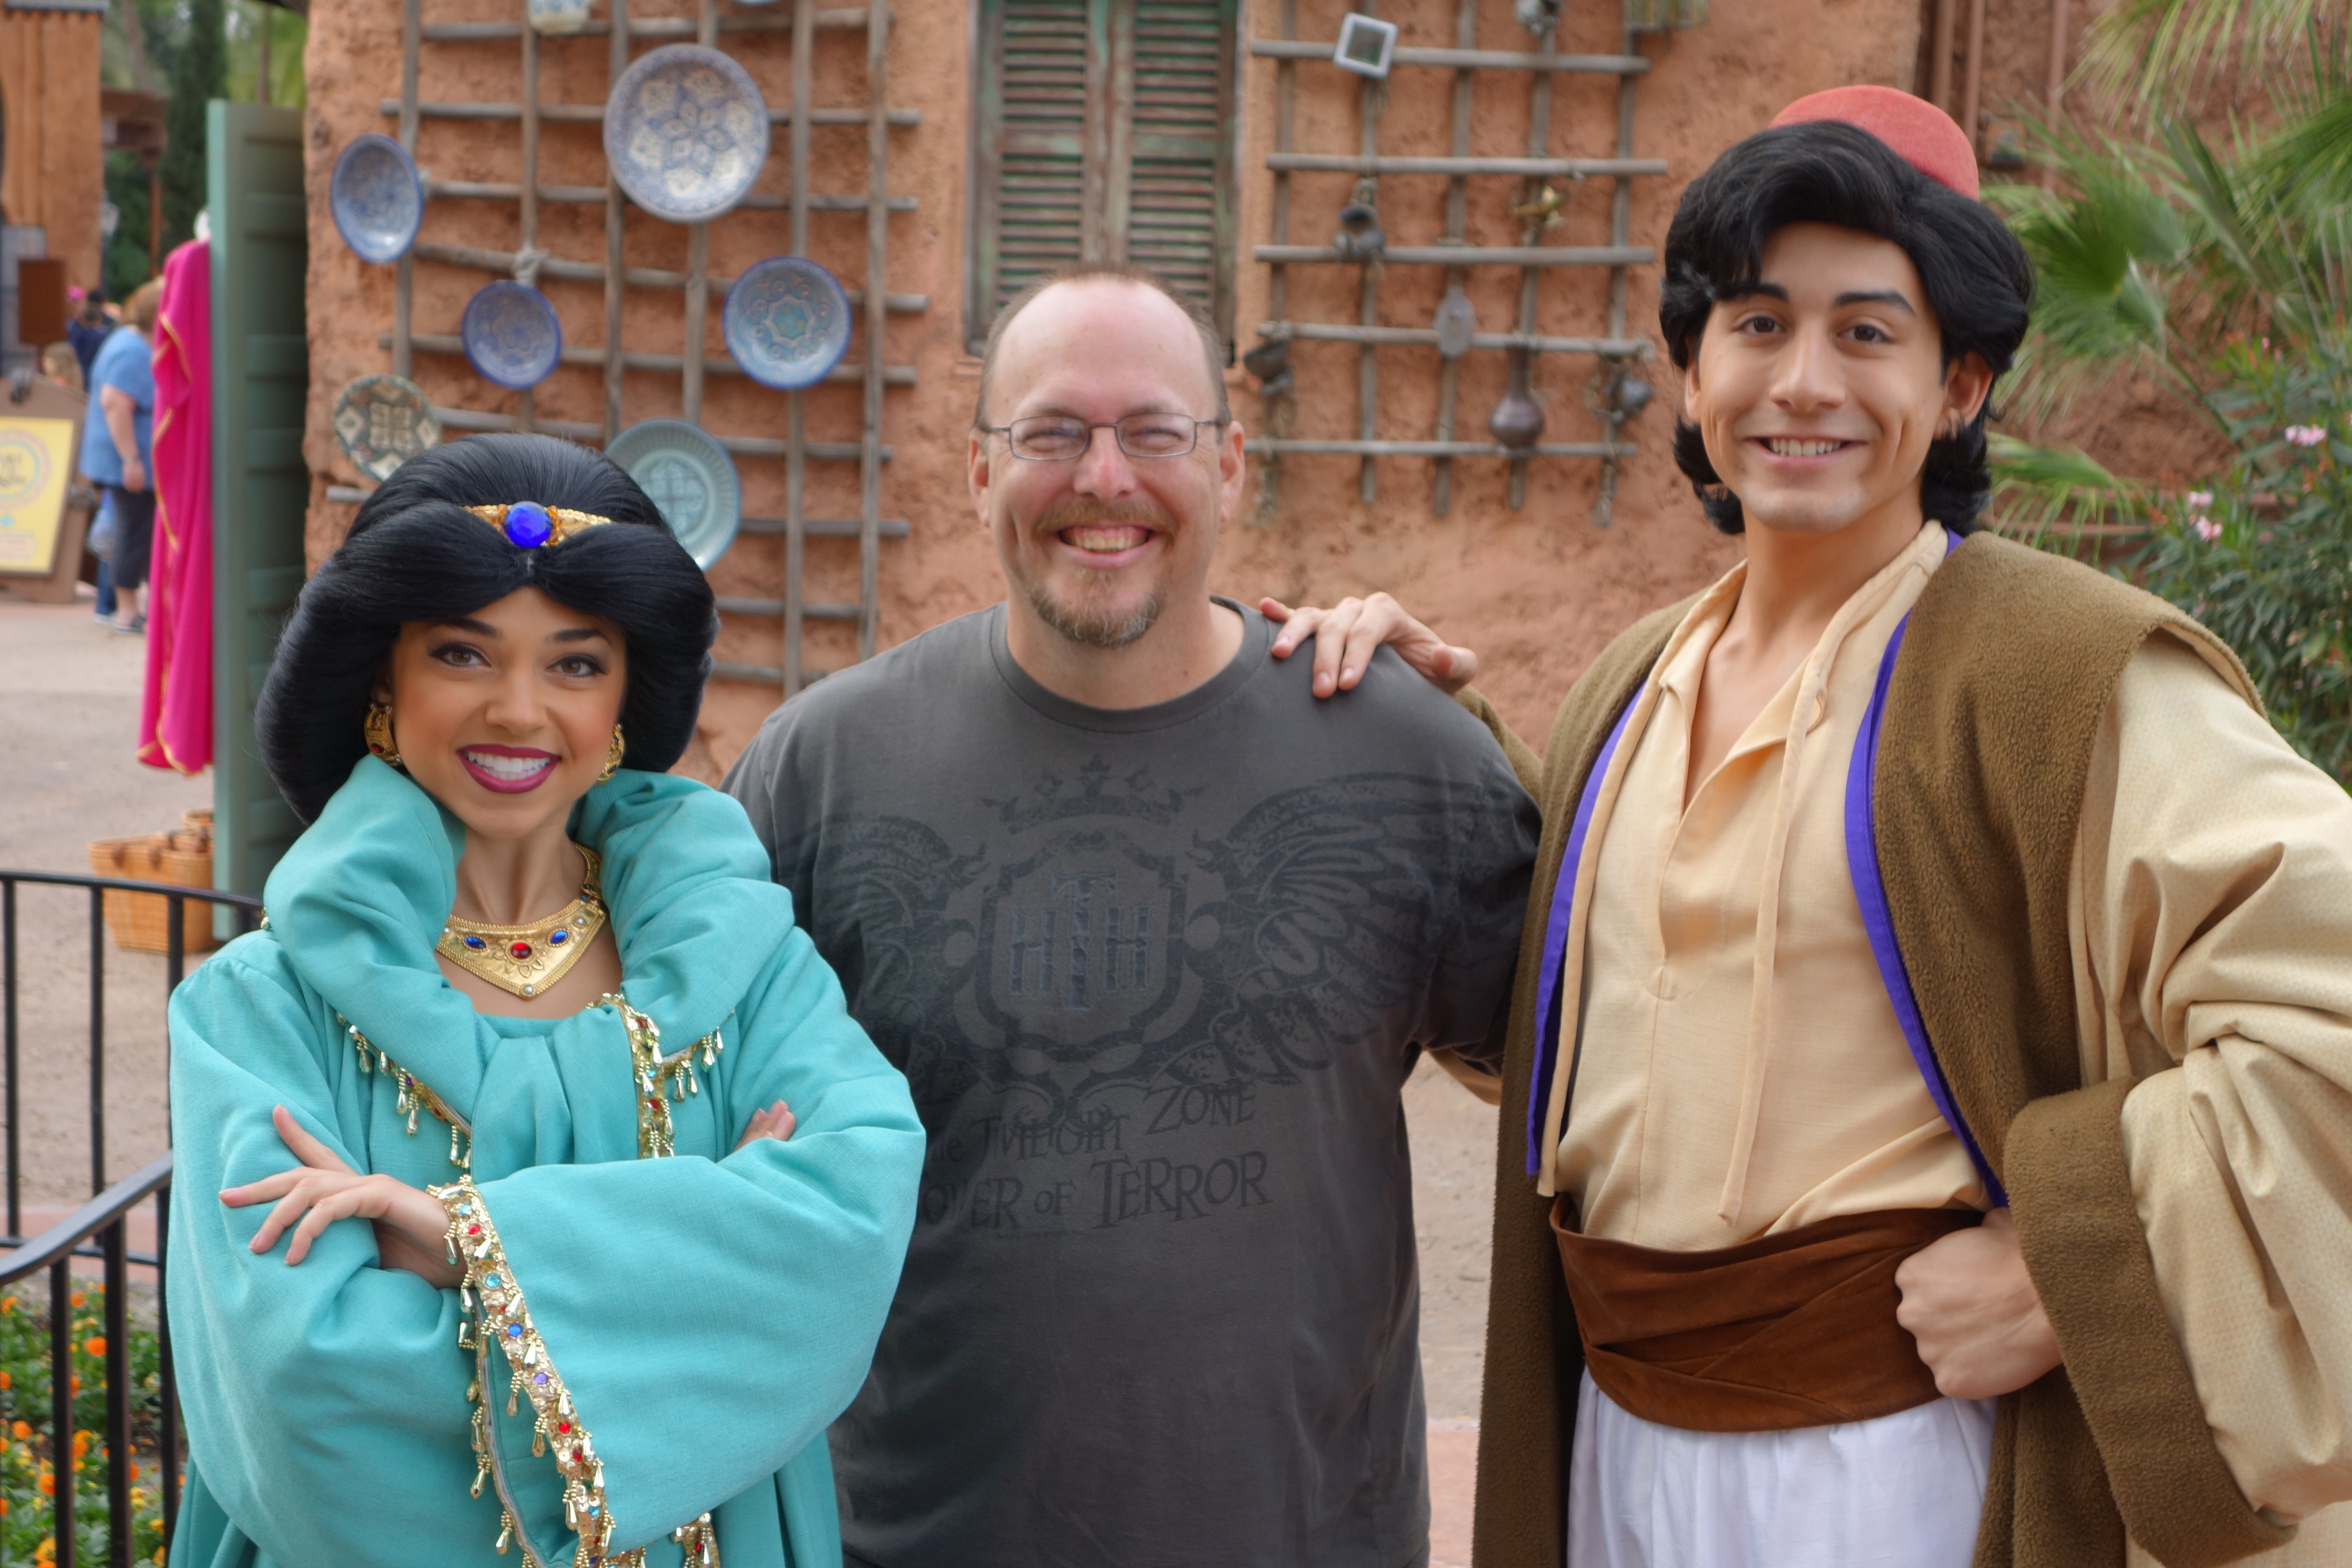 Aladdin and Jasmine at Morocco in EPCOT 2013